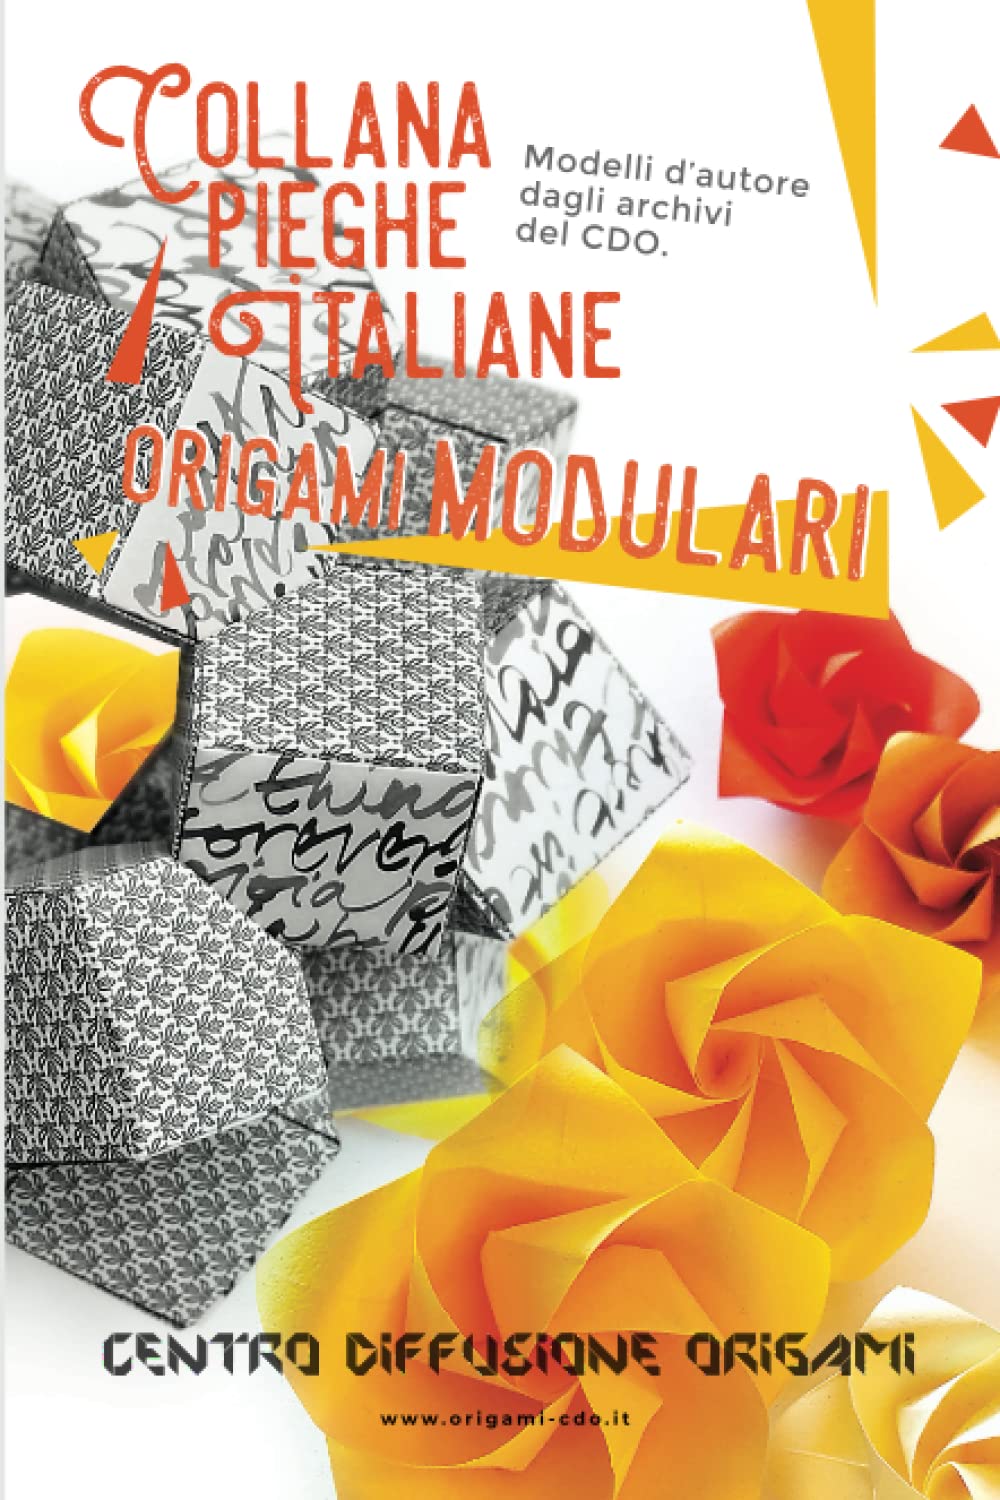 Pieghe italiane: origami modulari